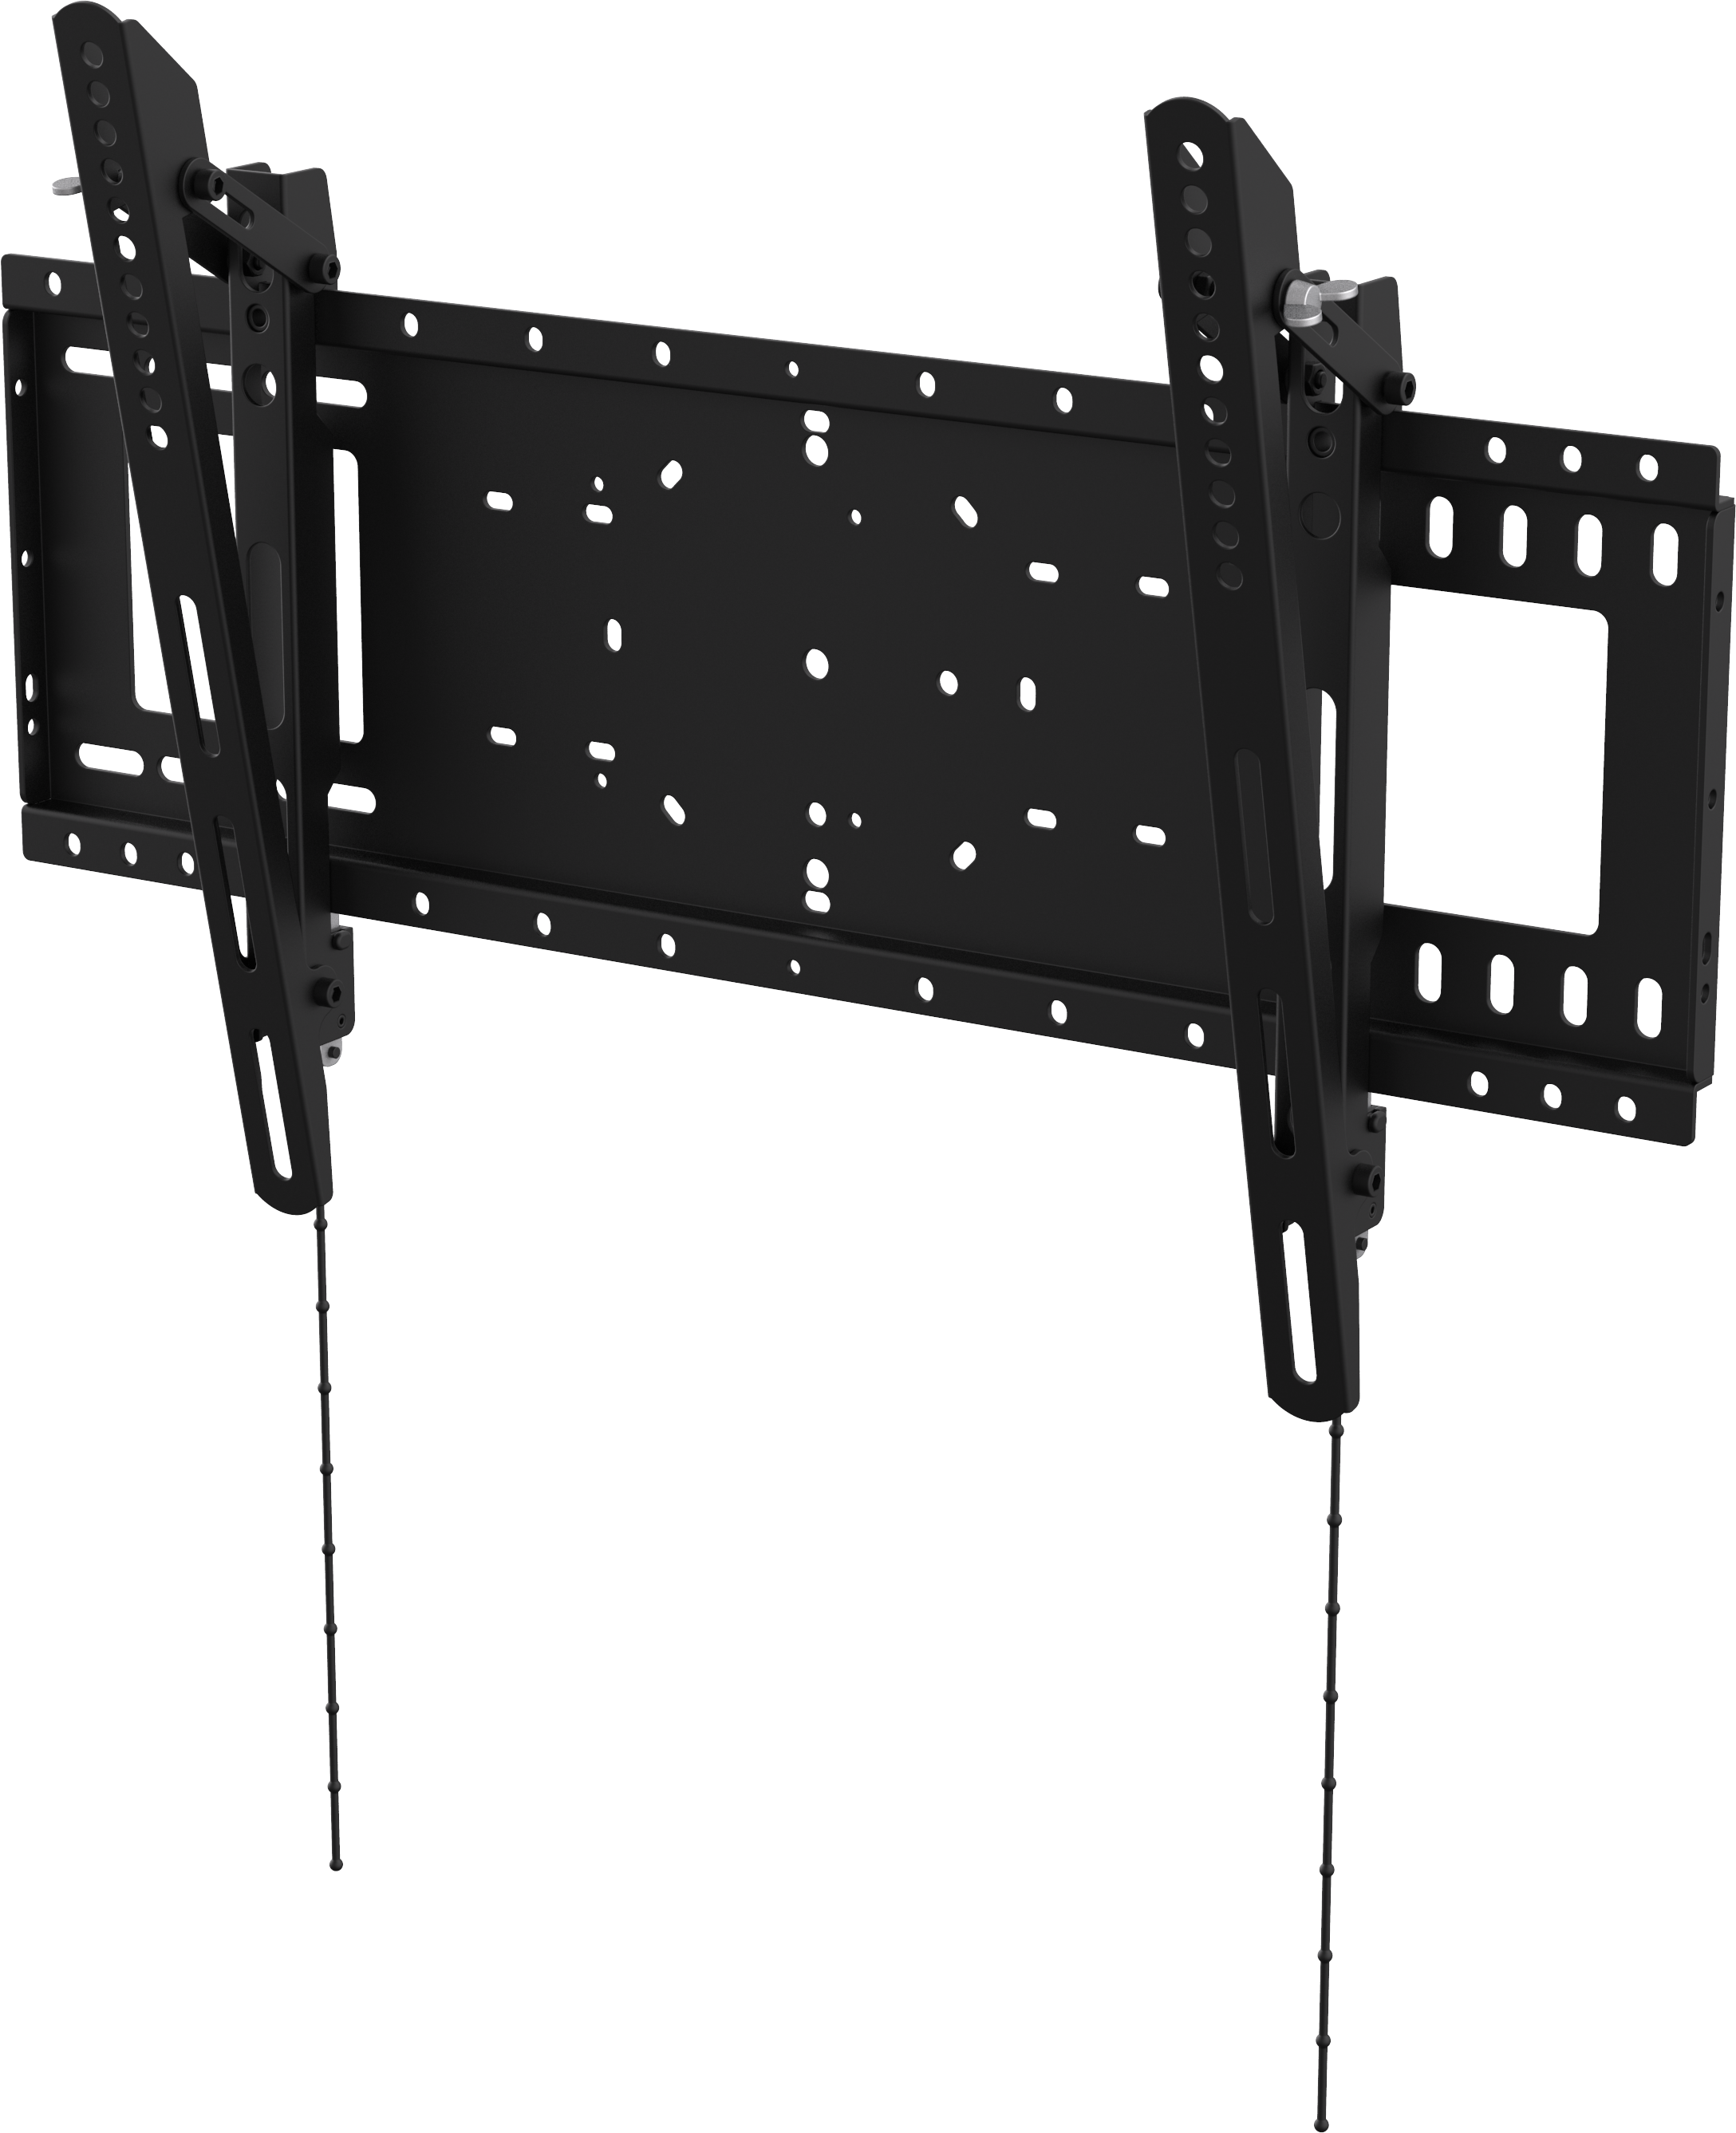 An image showing Heavy Duty Tilting Flat-Panel Wall Mount 600×400